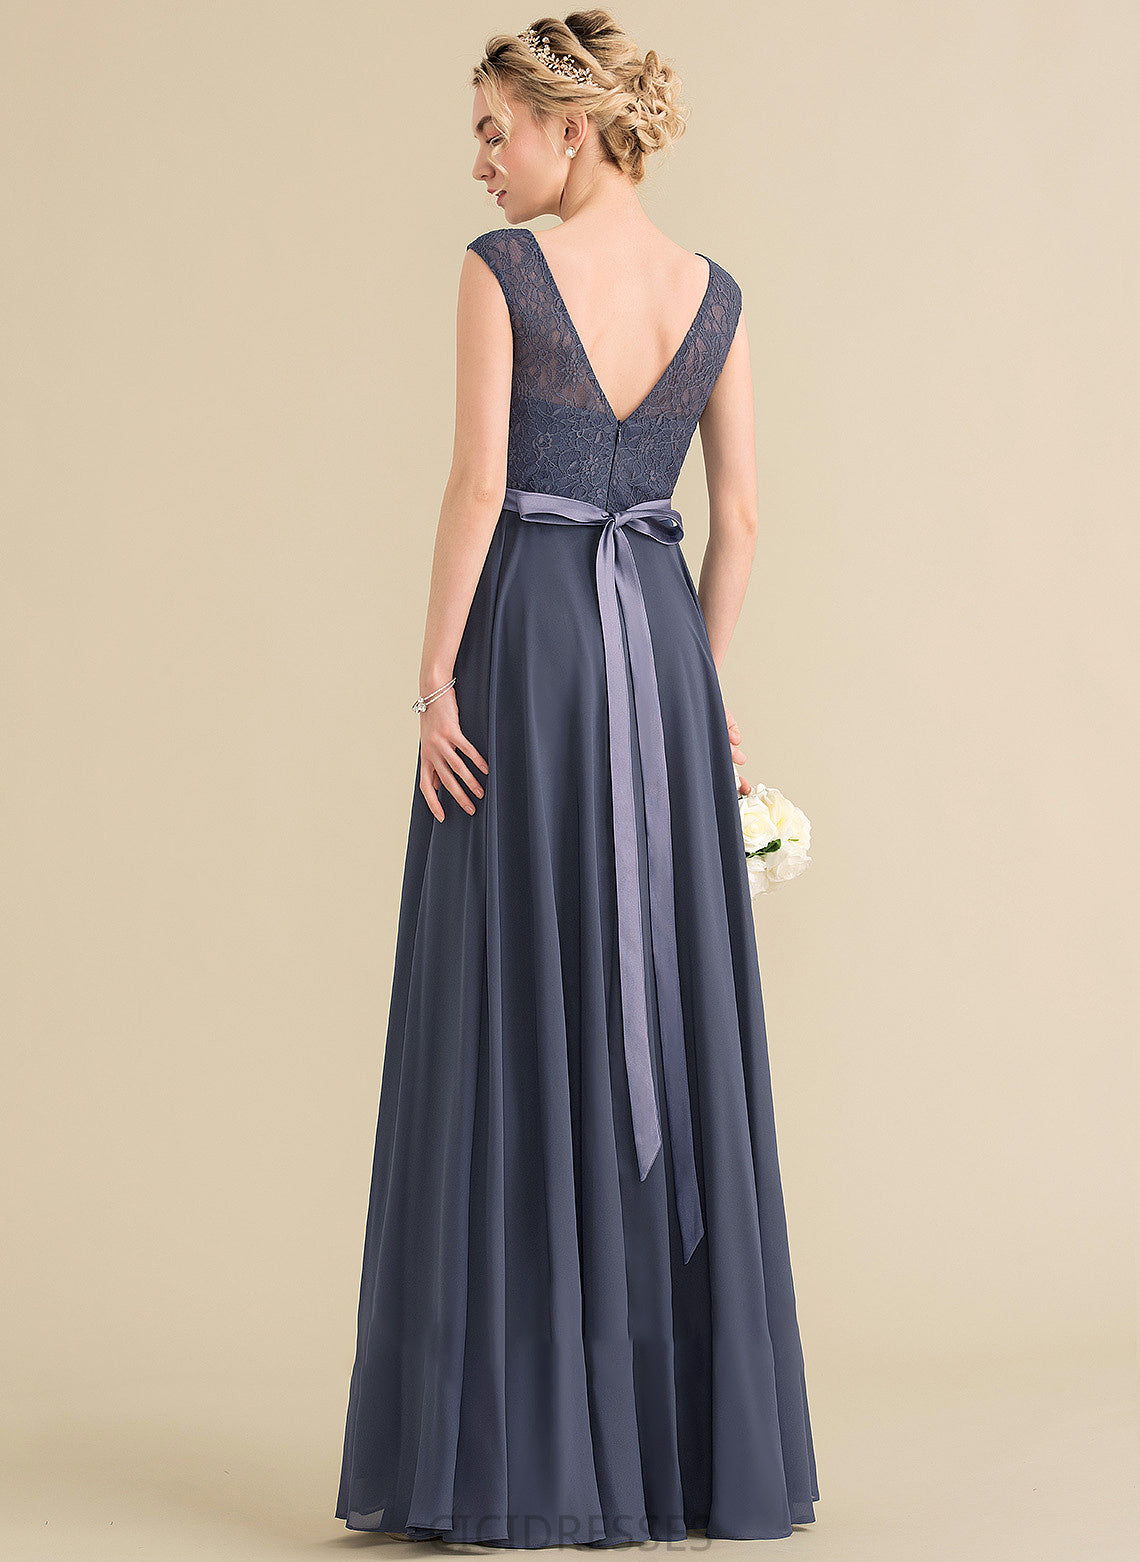 Silhouette Neckline Floor-Length ScoopNeck A-Line Length Bow(s) Embellishment Fabric Delilah Floor Length Sleeveless Bridesmaid Dresses